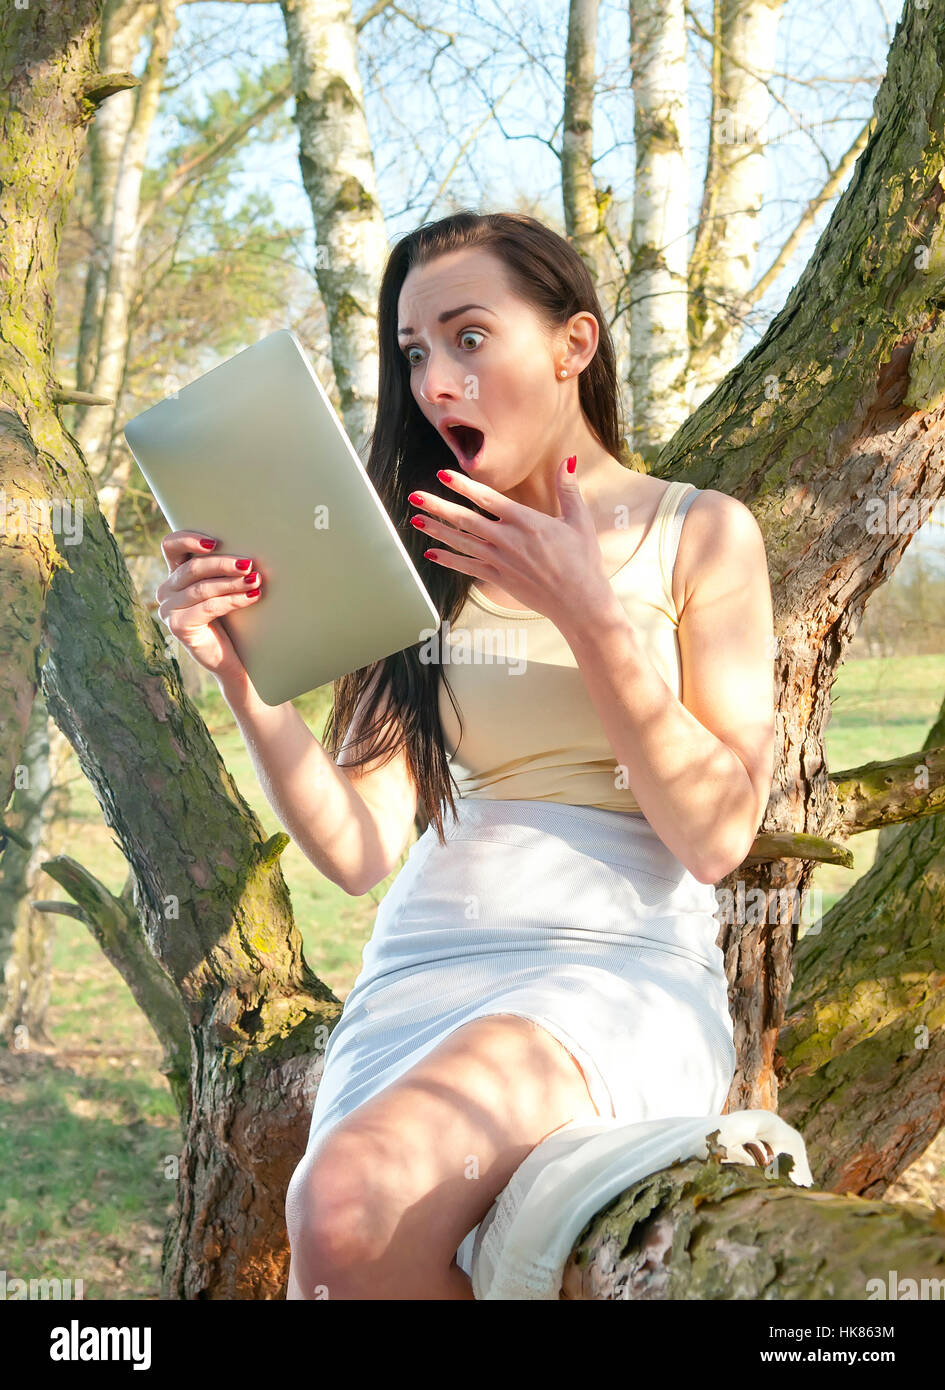 woman, tree, scariness, shock, horrified, surprised, astonished, study, laptop, Stock Photo